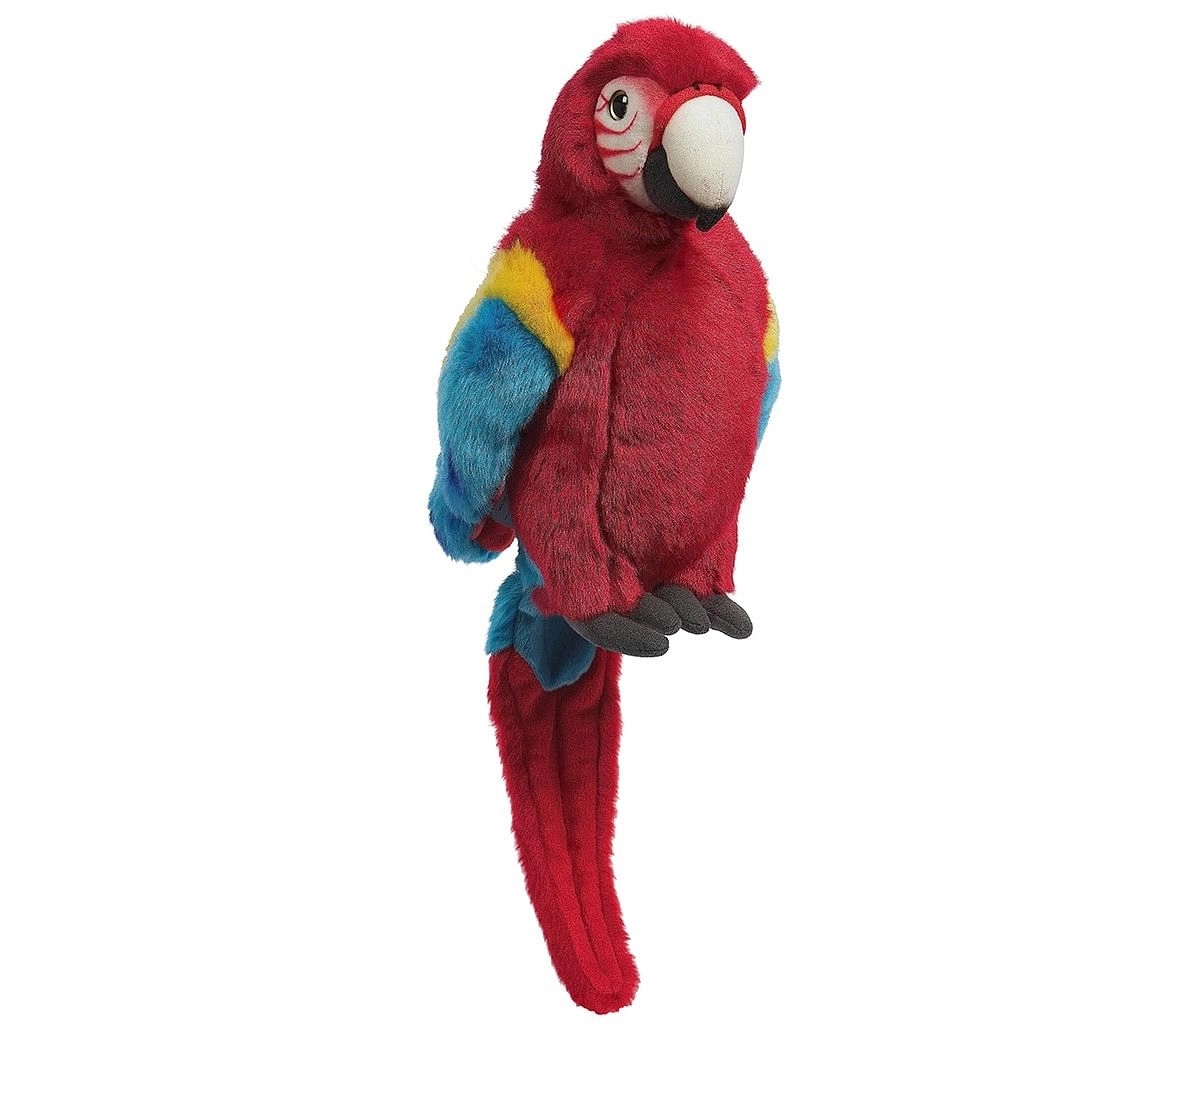  Hamleys Poppy Red Parrot Soft Toy Animals & Birds for Kids age 2Y+ - 12 Cm 